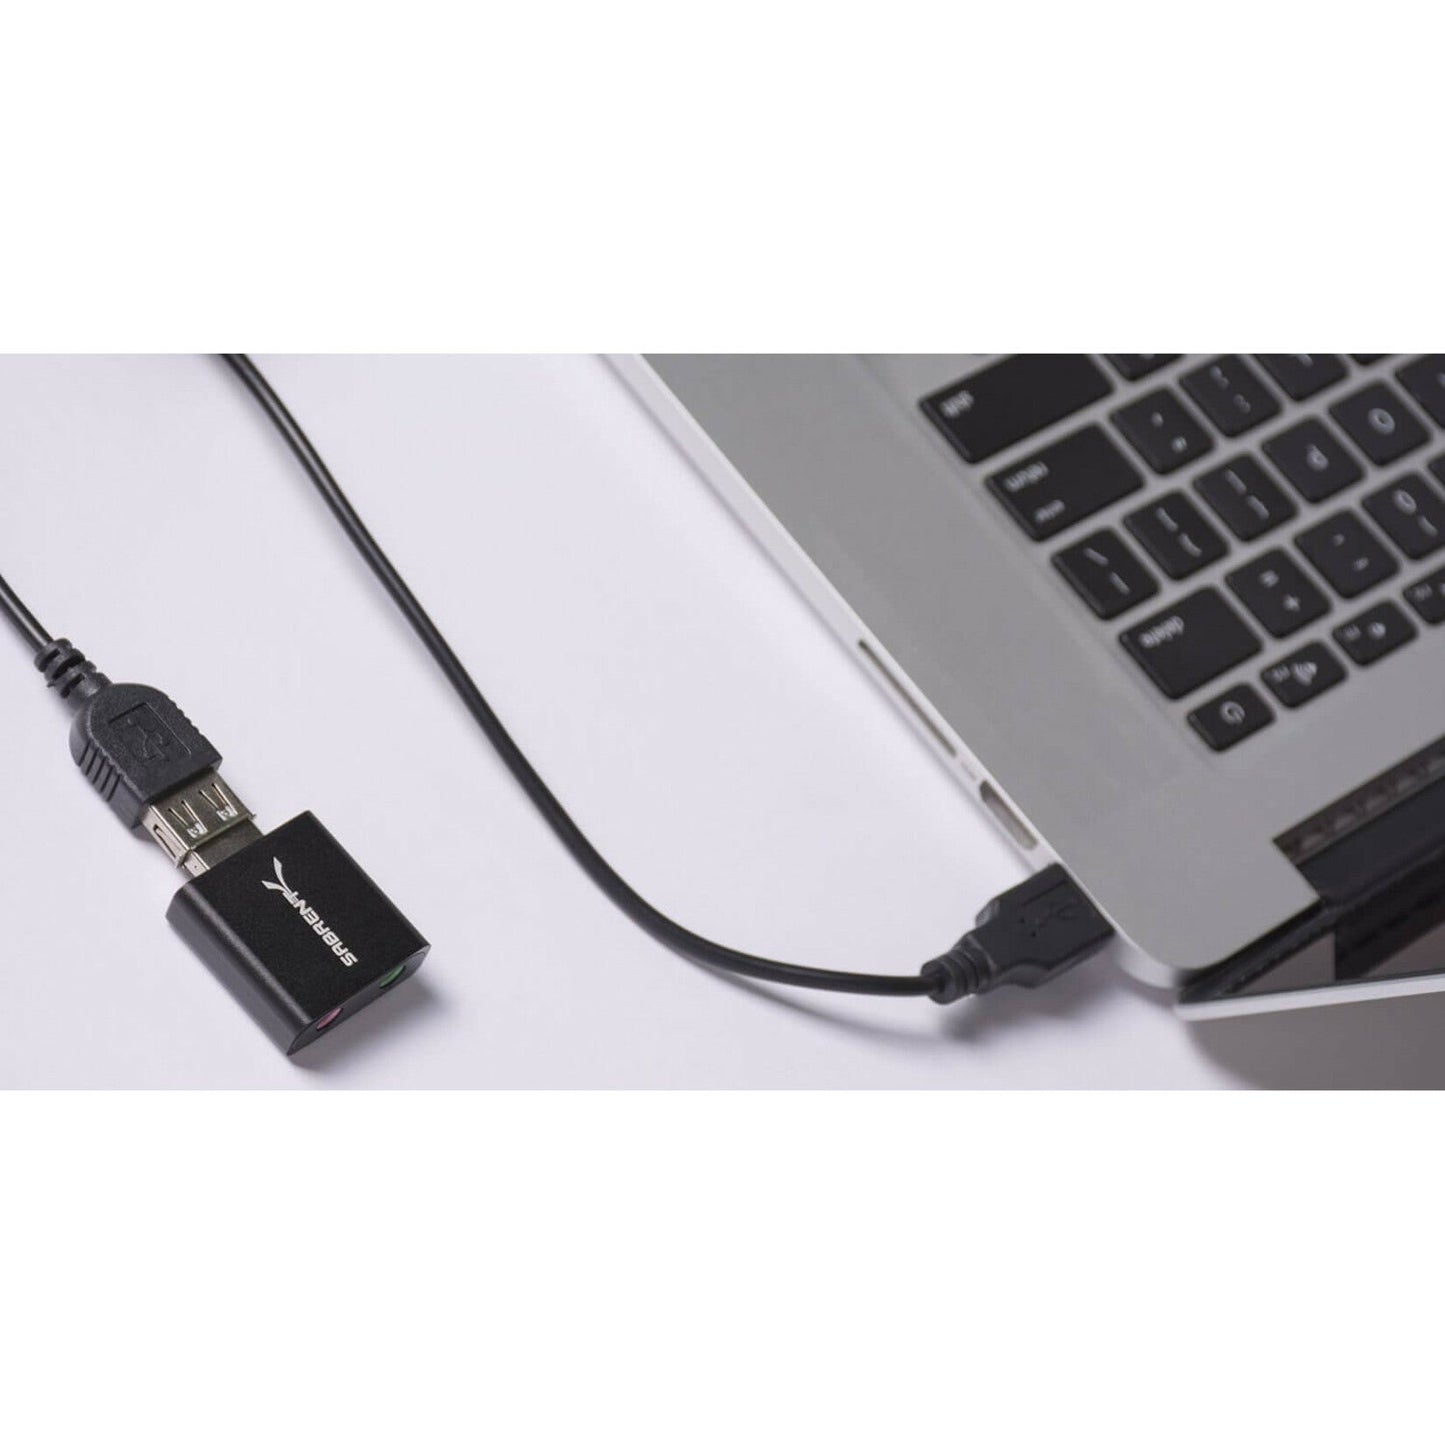 Sabrent USB Aluminum External Stereo Sound Adapter | Black